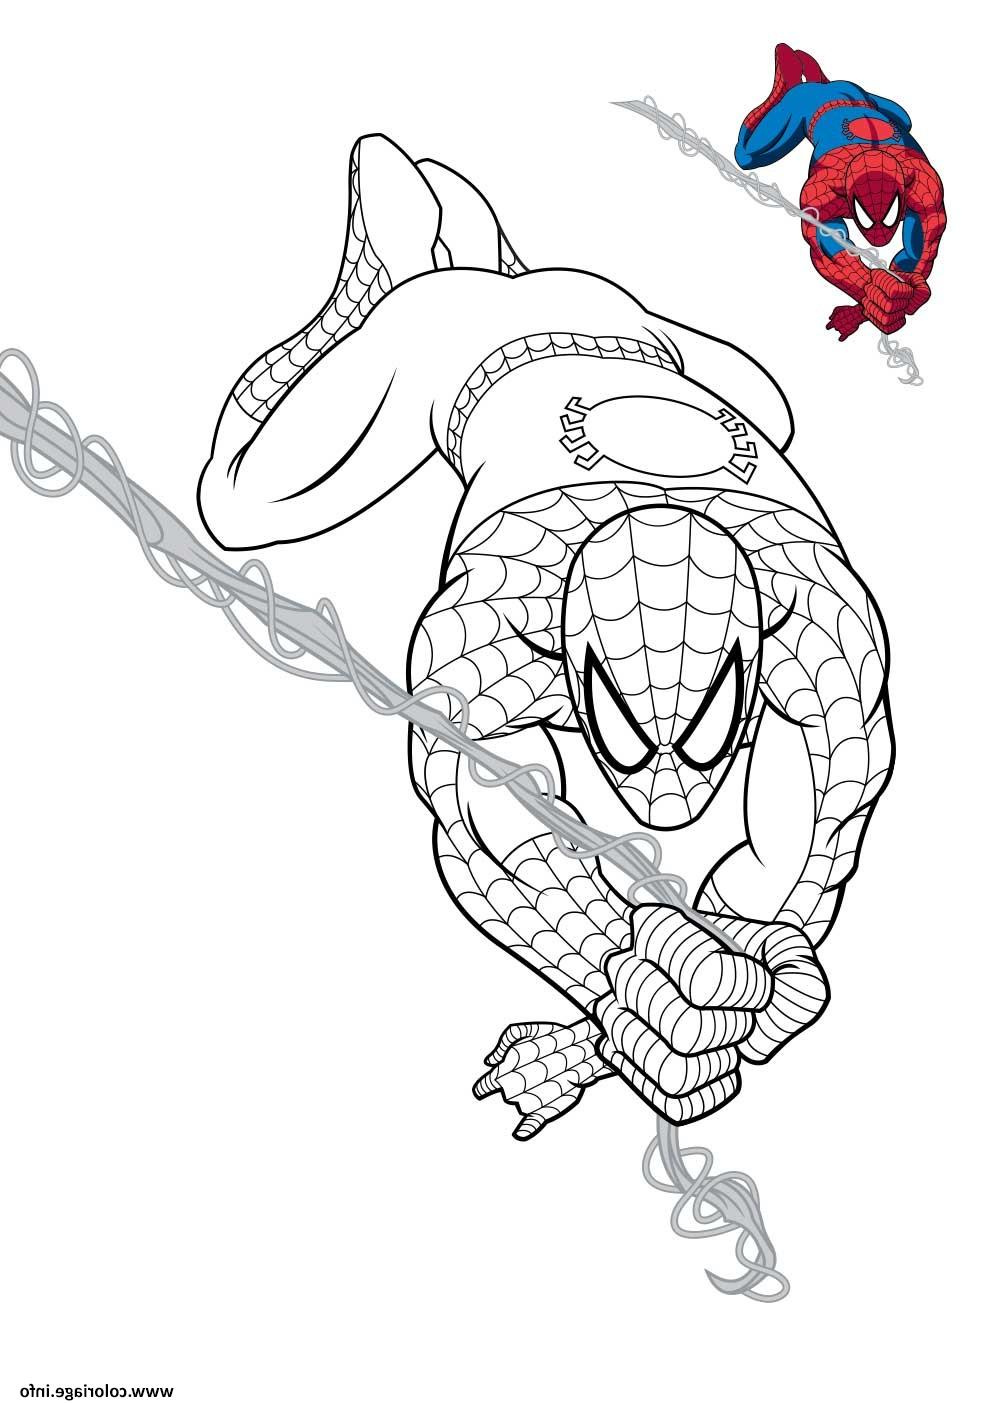 Coloriage Spiderman Facile Impressionnant Stock Coloriage Spiderman En Plein Action Dessin